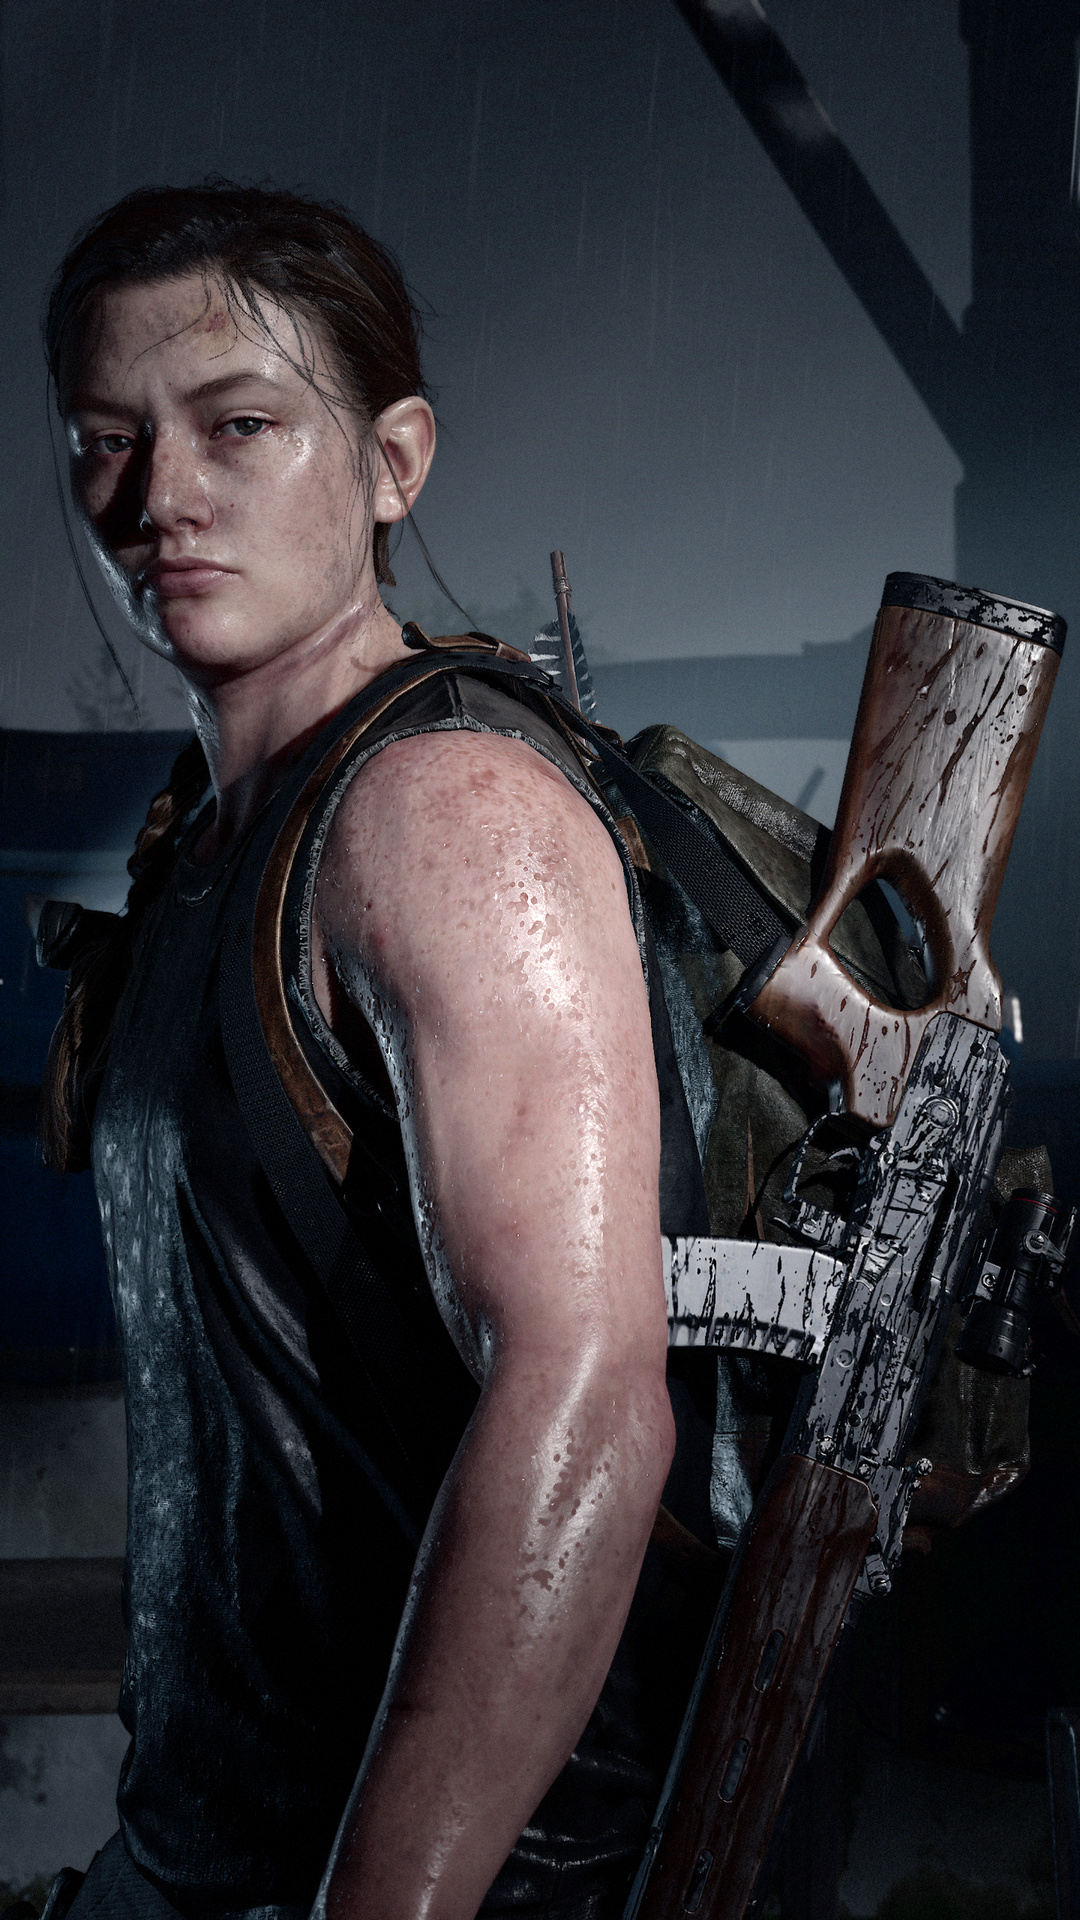 Petri Levälahti on X: The Last of Us 2 (PS4 photo mode) Phone background  mini-thread 06 // Abby  / X